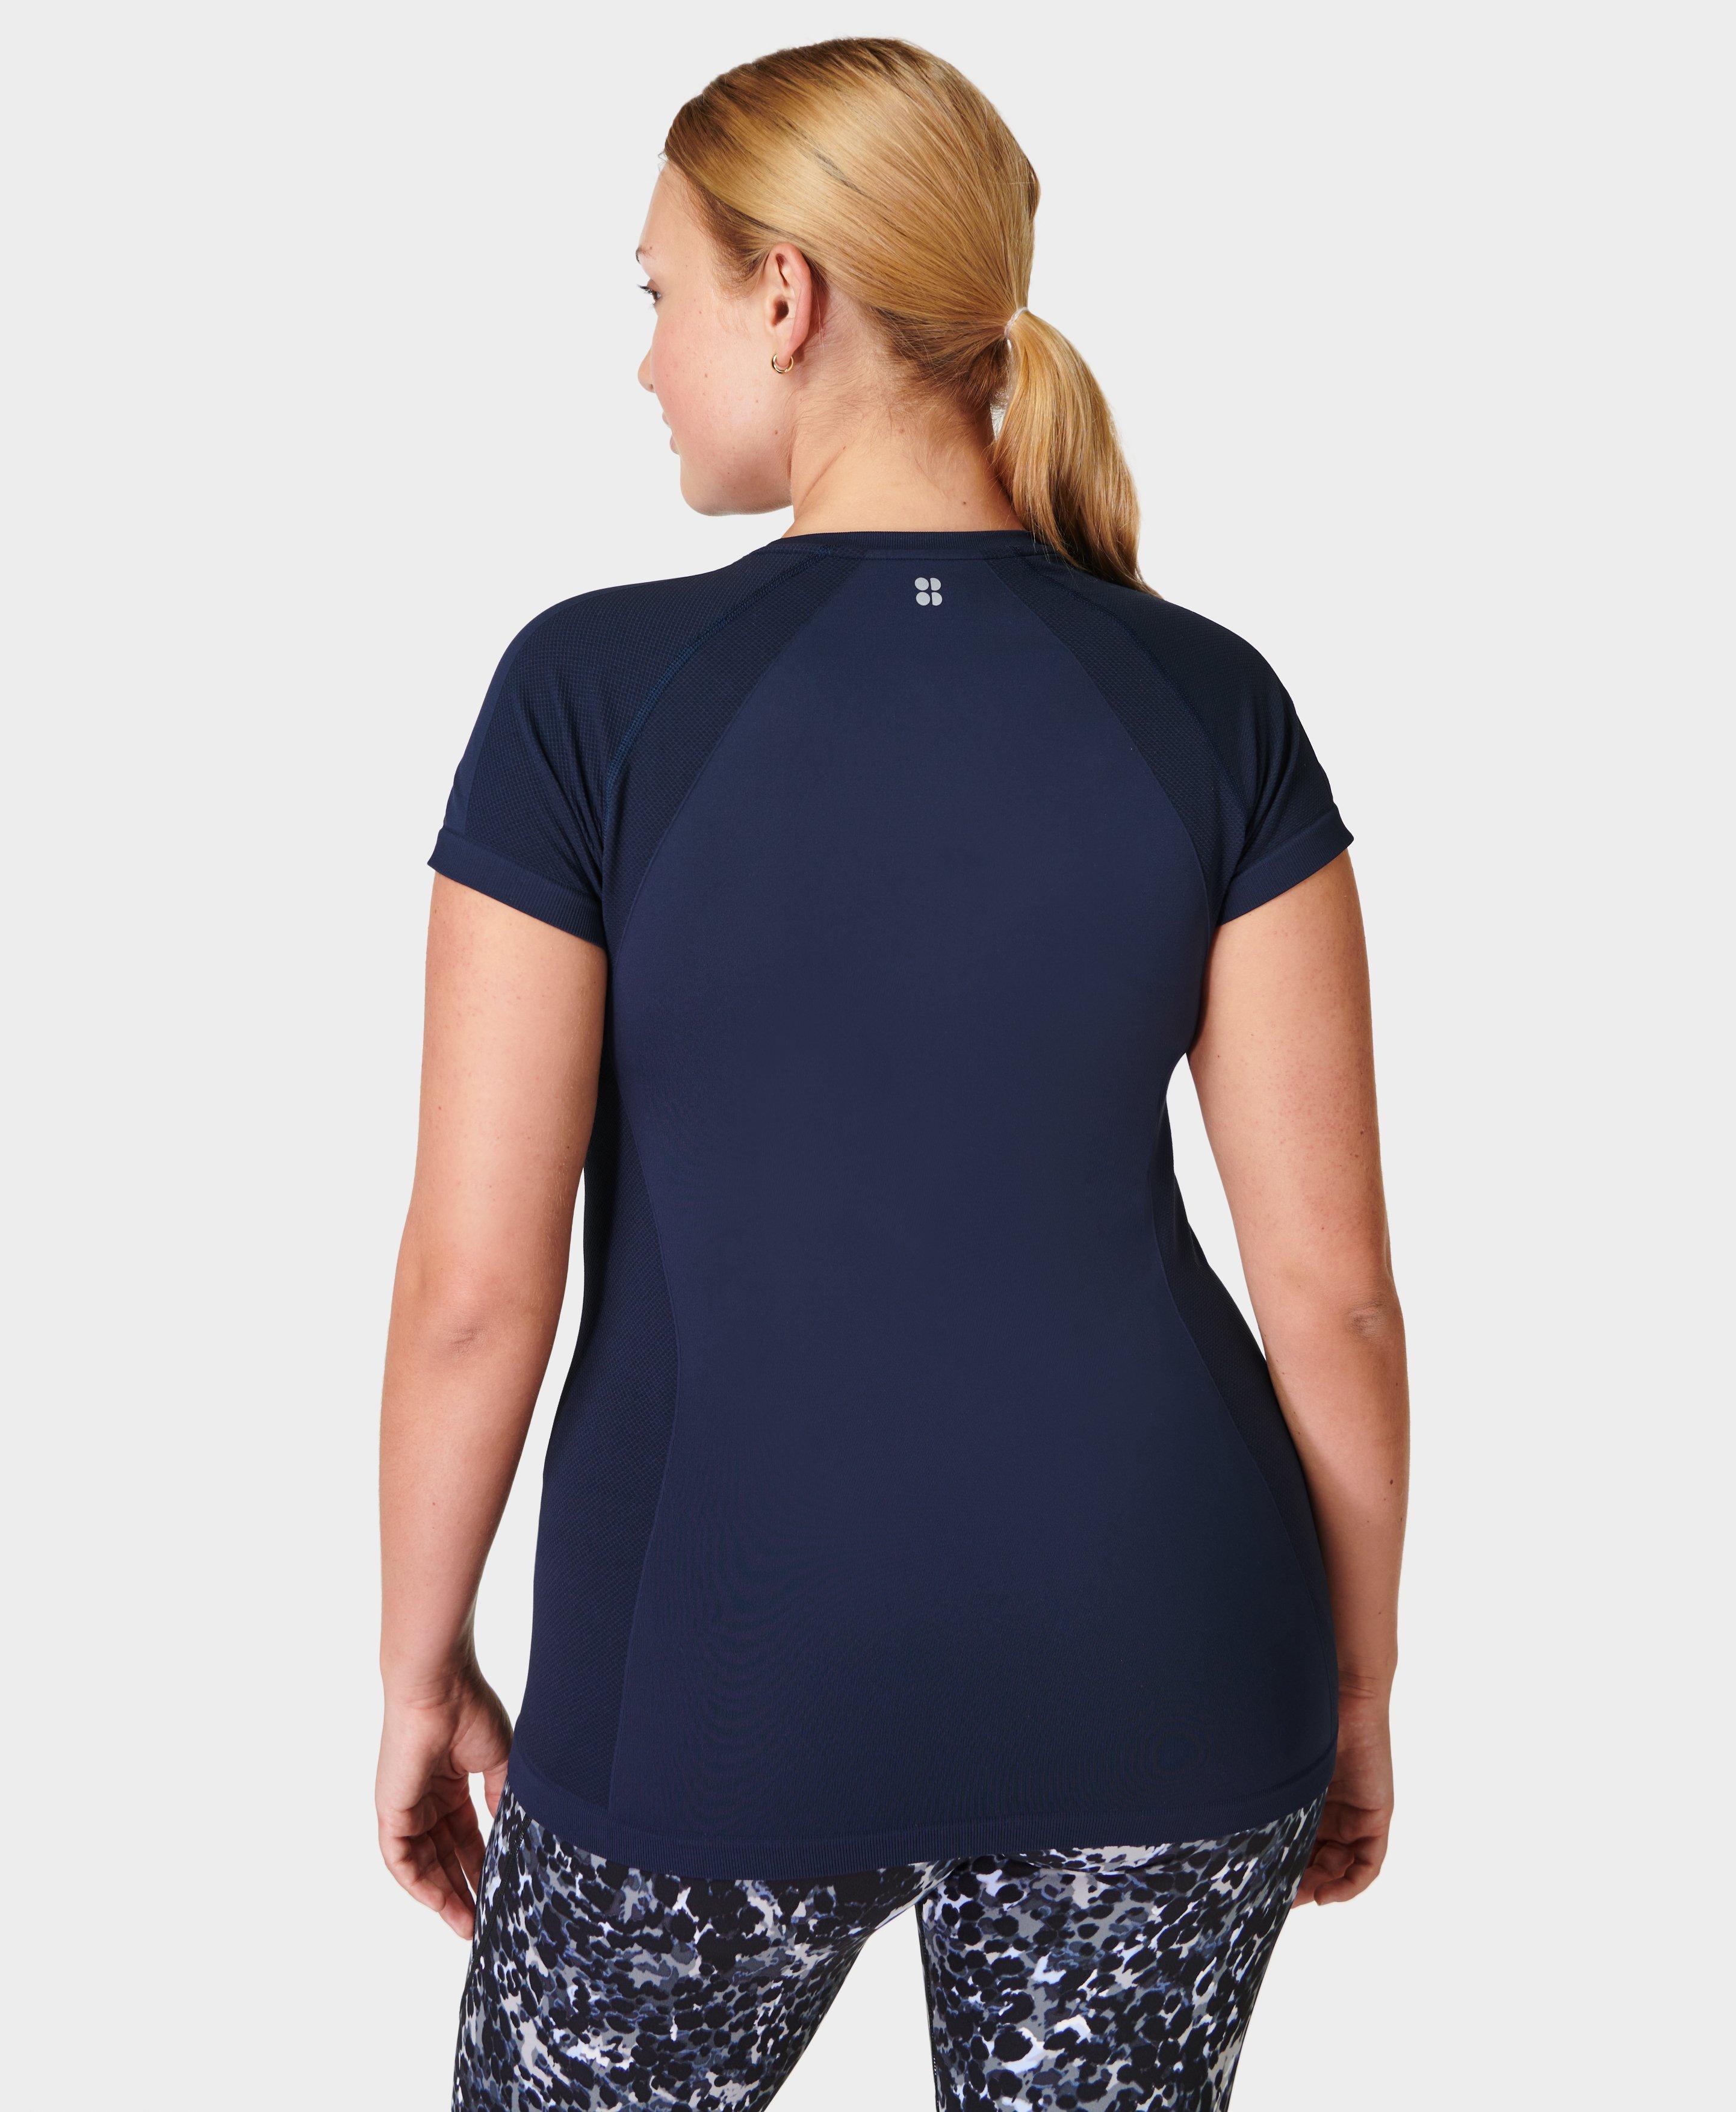 Tees, Women's Gym T-Shirts, Yoga T-Shirts, Varley US